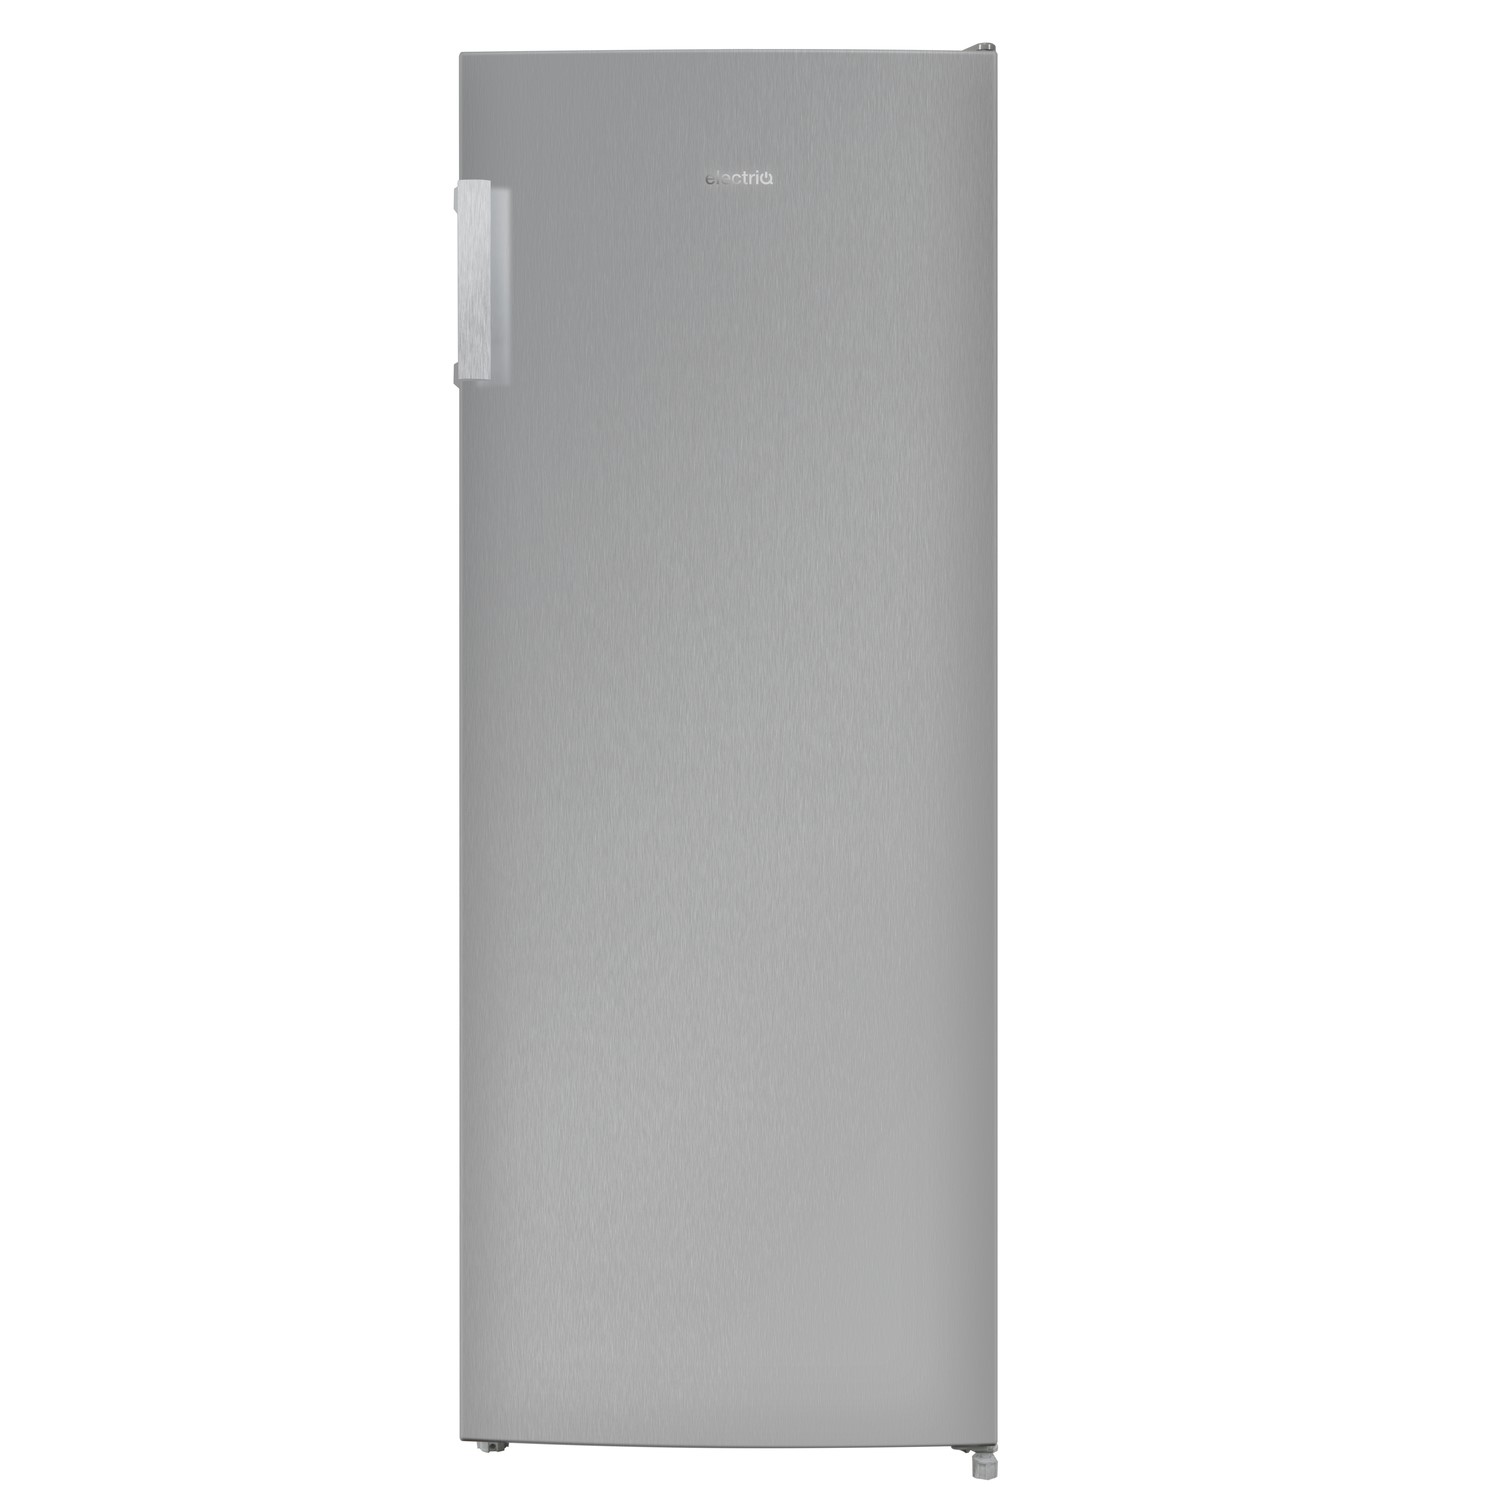 electriQ 166 Litre Freestanding Upright Freezer - Stainless Steel